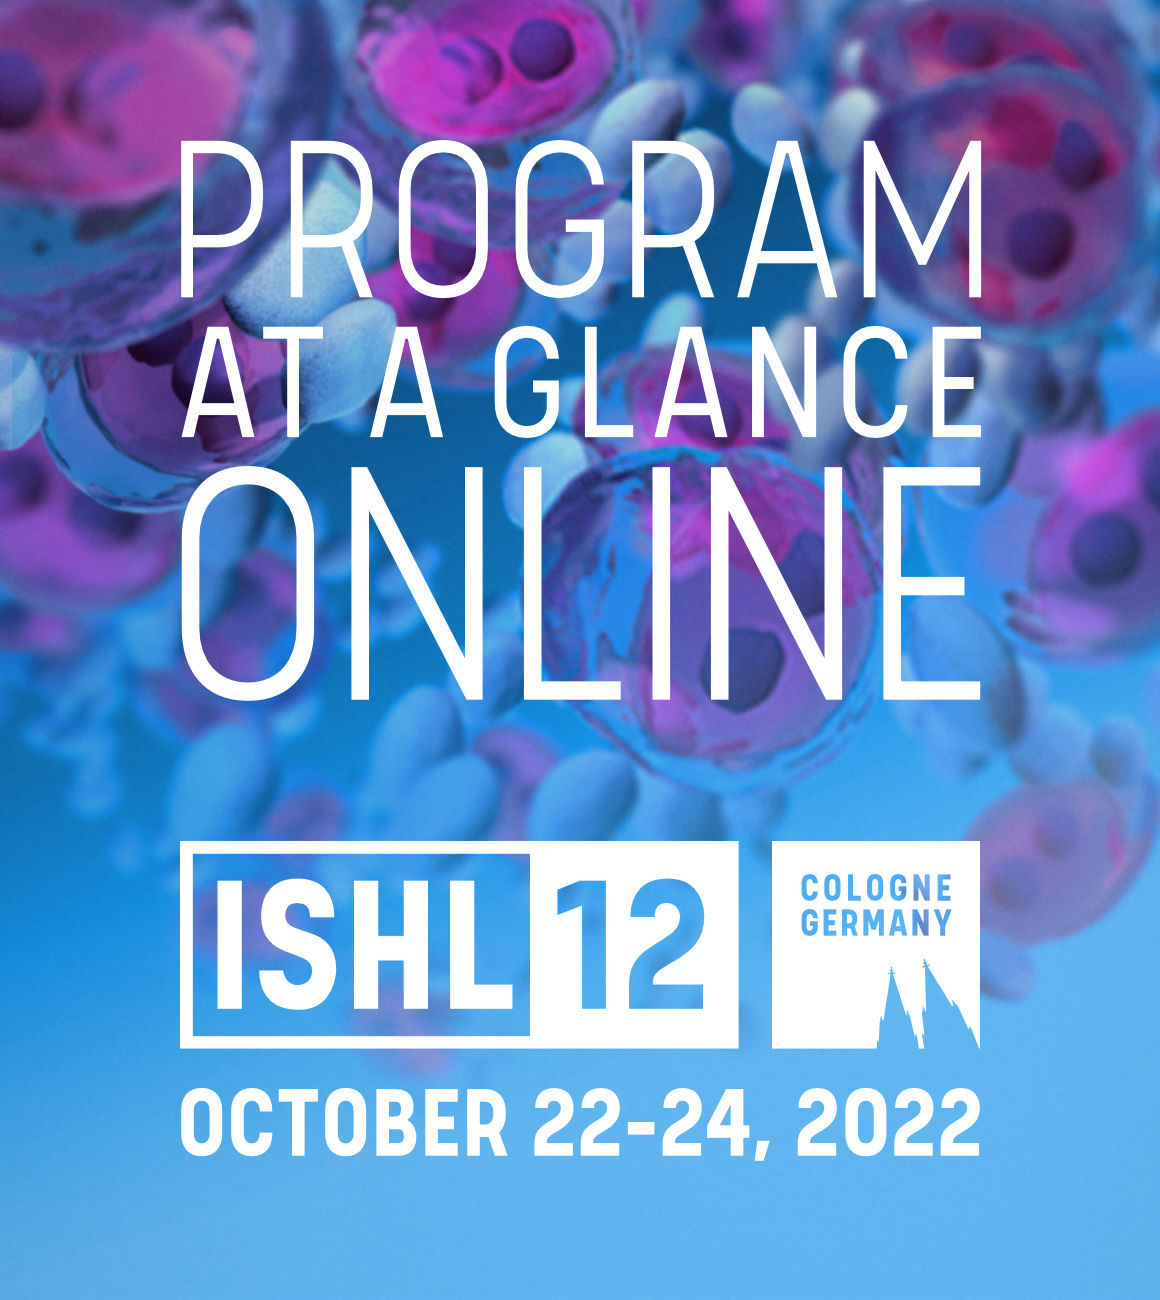 ISHL12 - Program at a Glance online